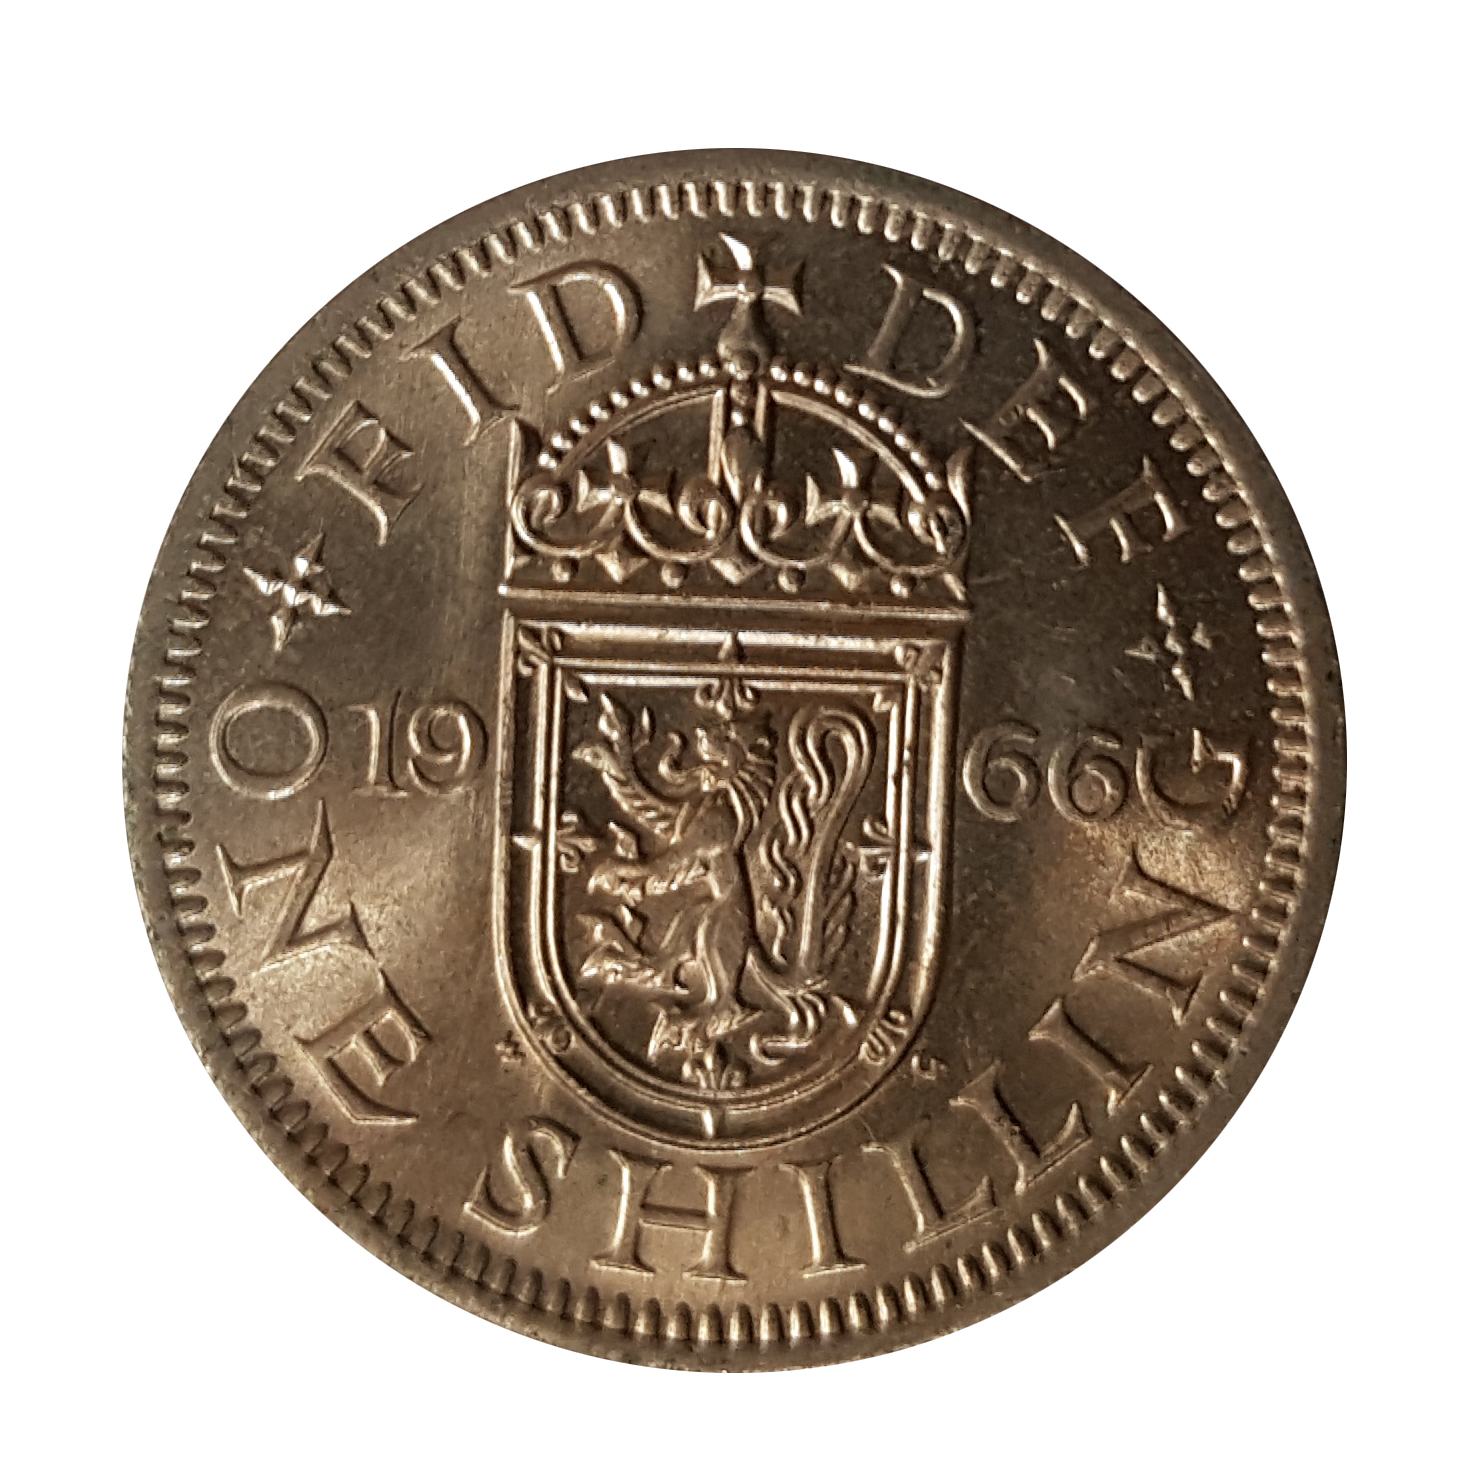 1966 two shillings